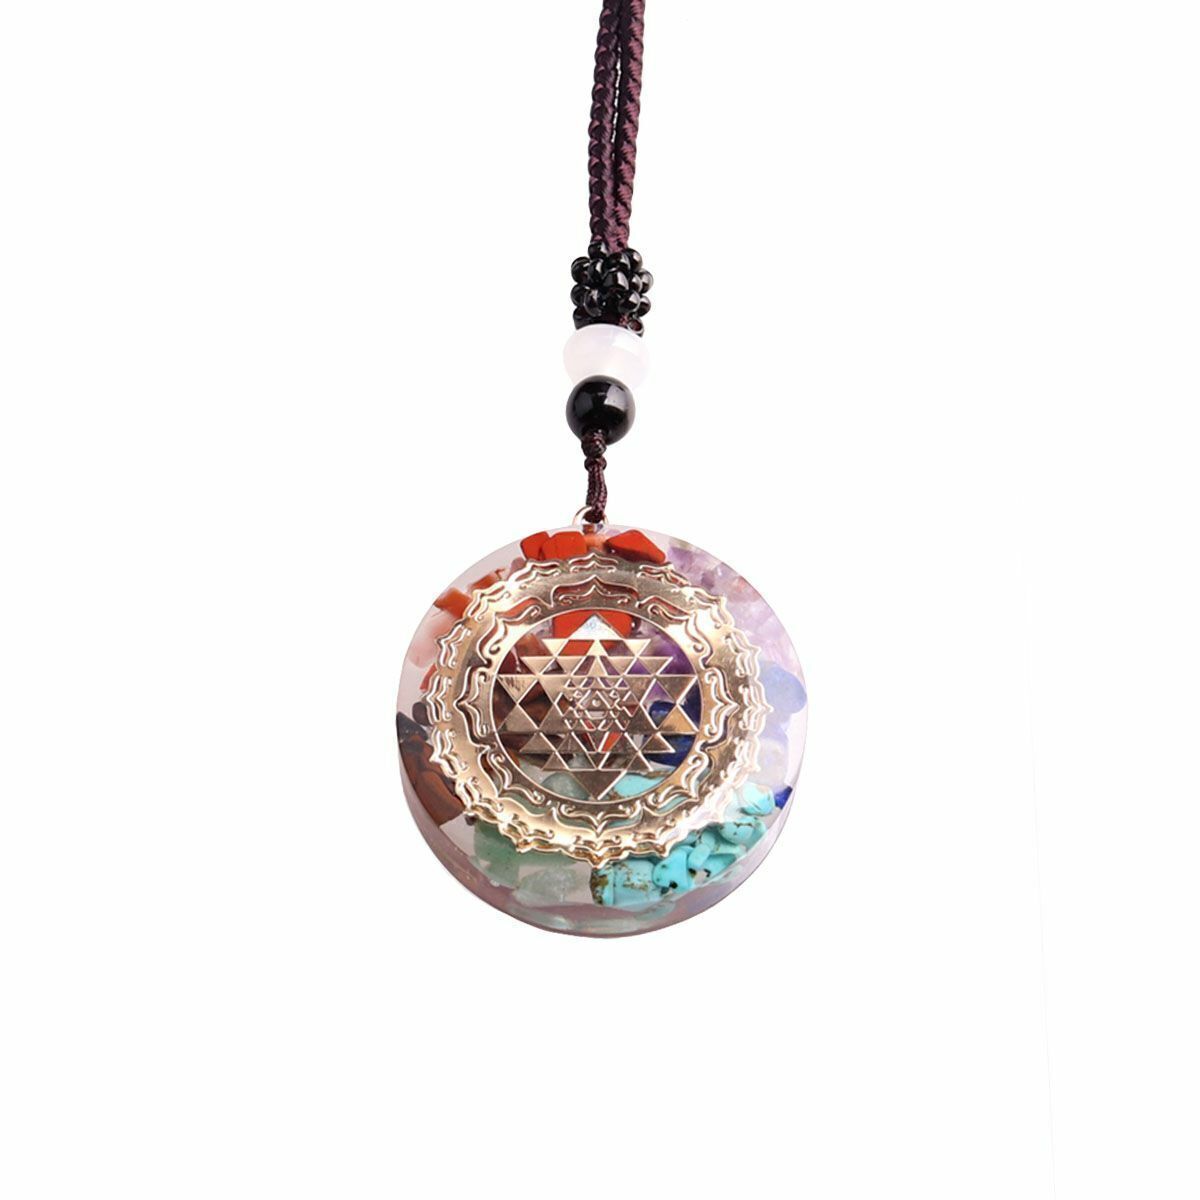 7 Chakra Natural Stone Energy Pendant Necklace Yoga Reiki Healing Amulet Choker